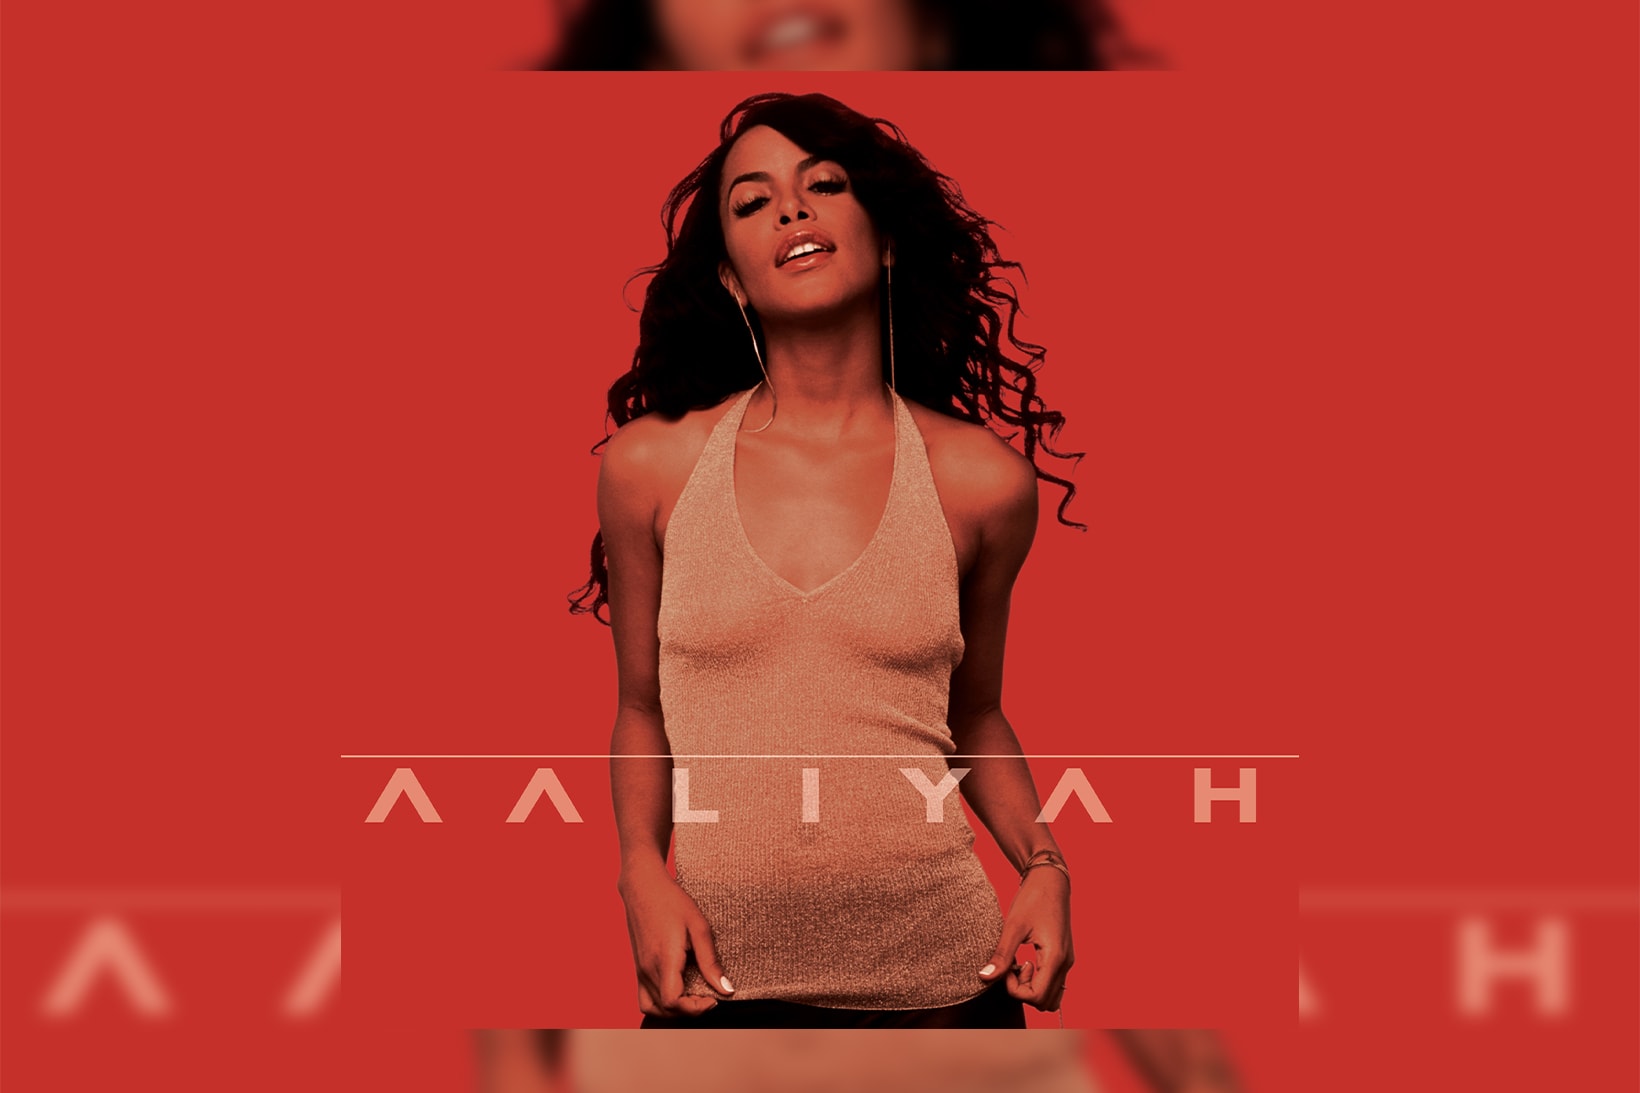 Aaliyah Self-Titled Album Spotify Apple Music Artist Musician Performer Singer 